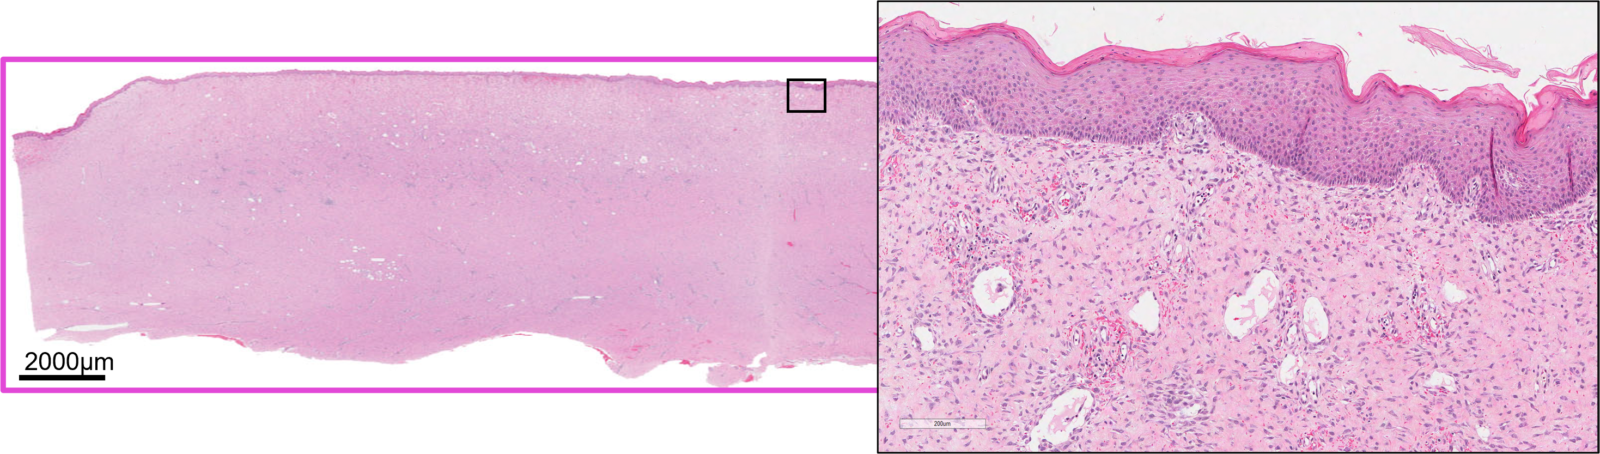 Image 1: Hematoxylin and eosin stain